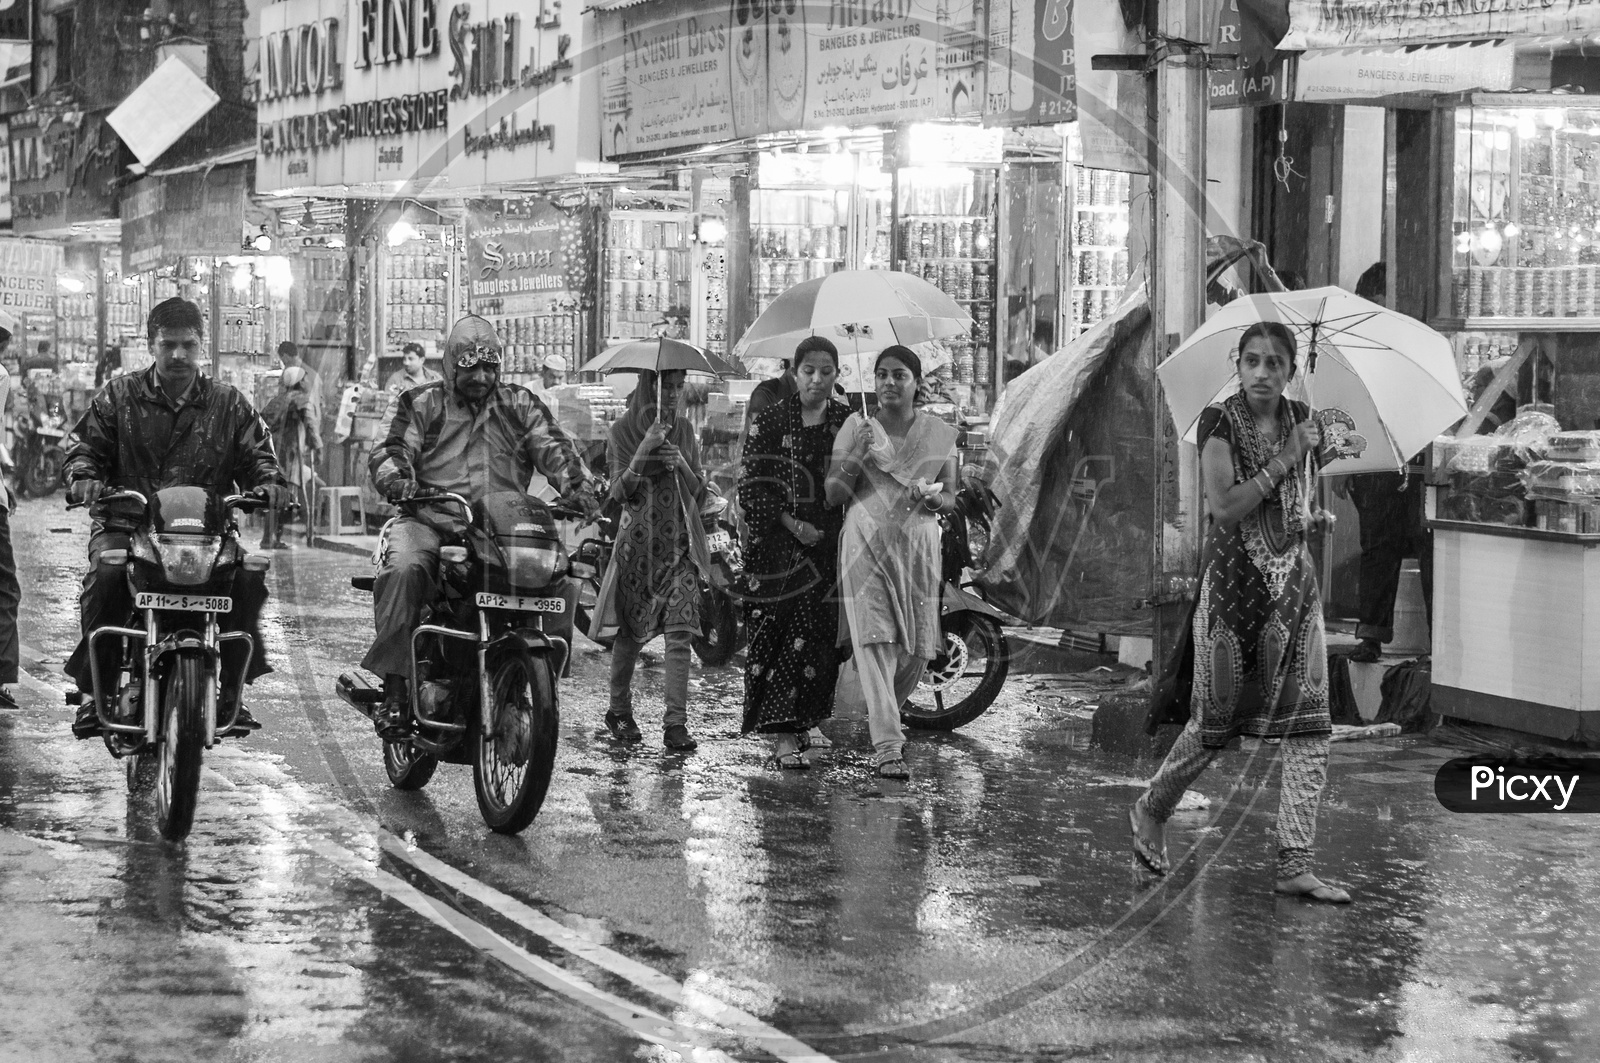 Rains in Hyderabad